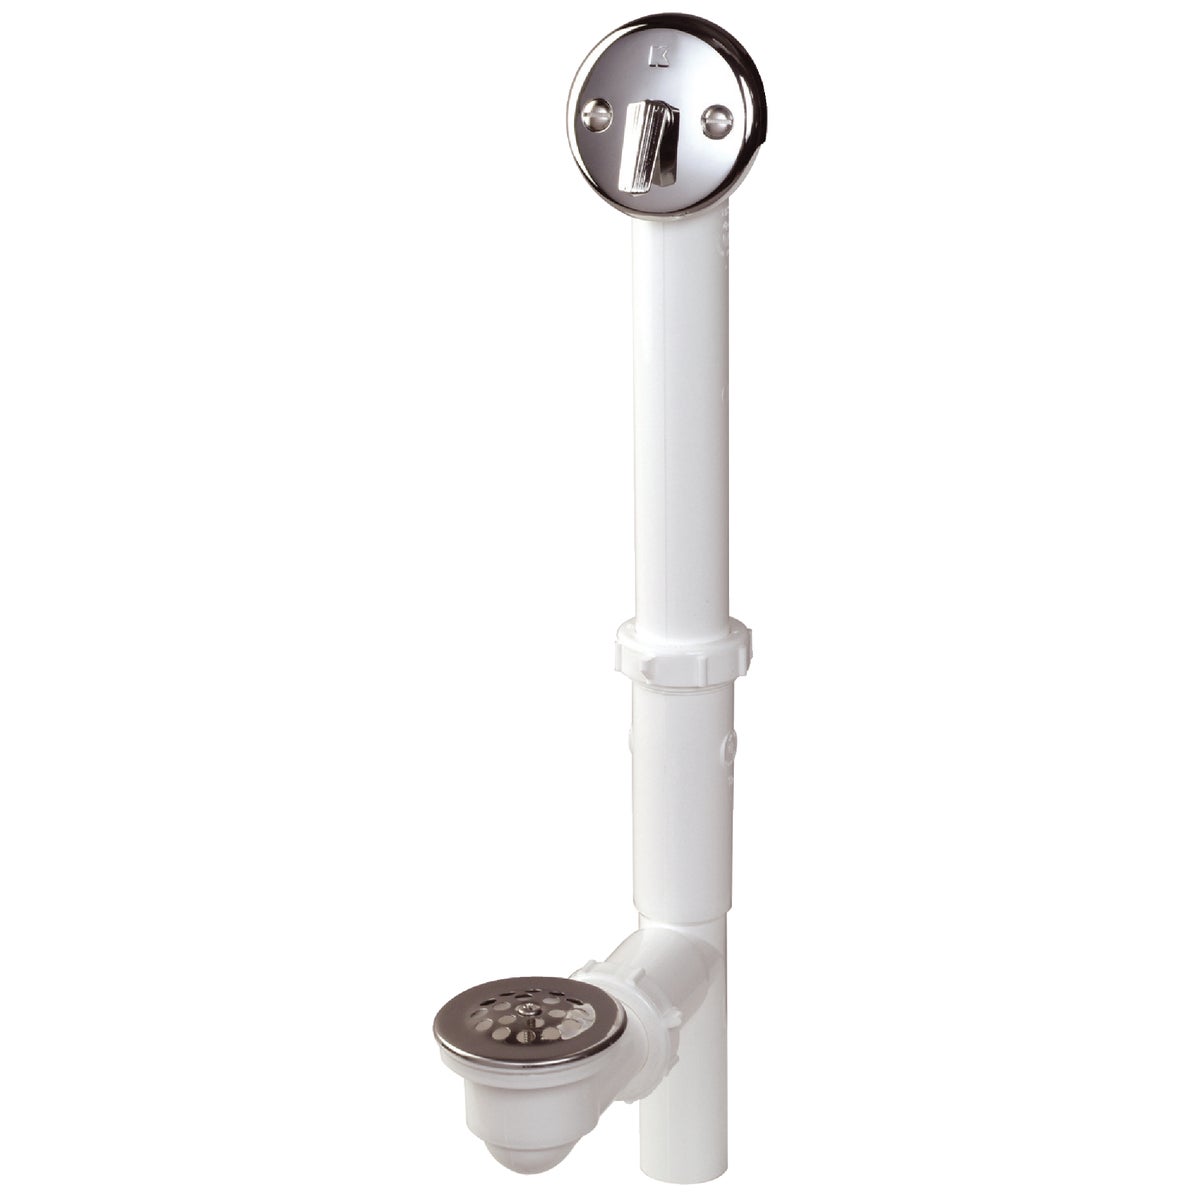 Item 412643, Do it Best trip lever bath drain. 1-1/2" diameter tubing.